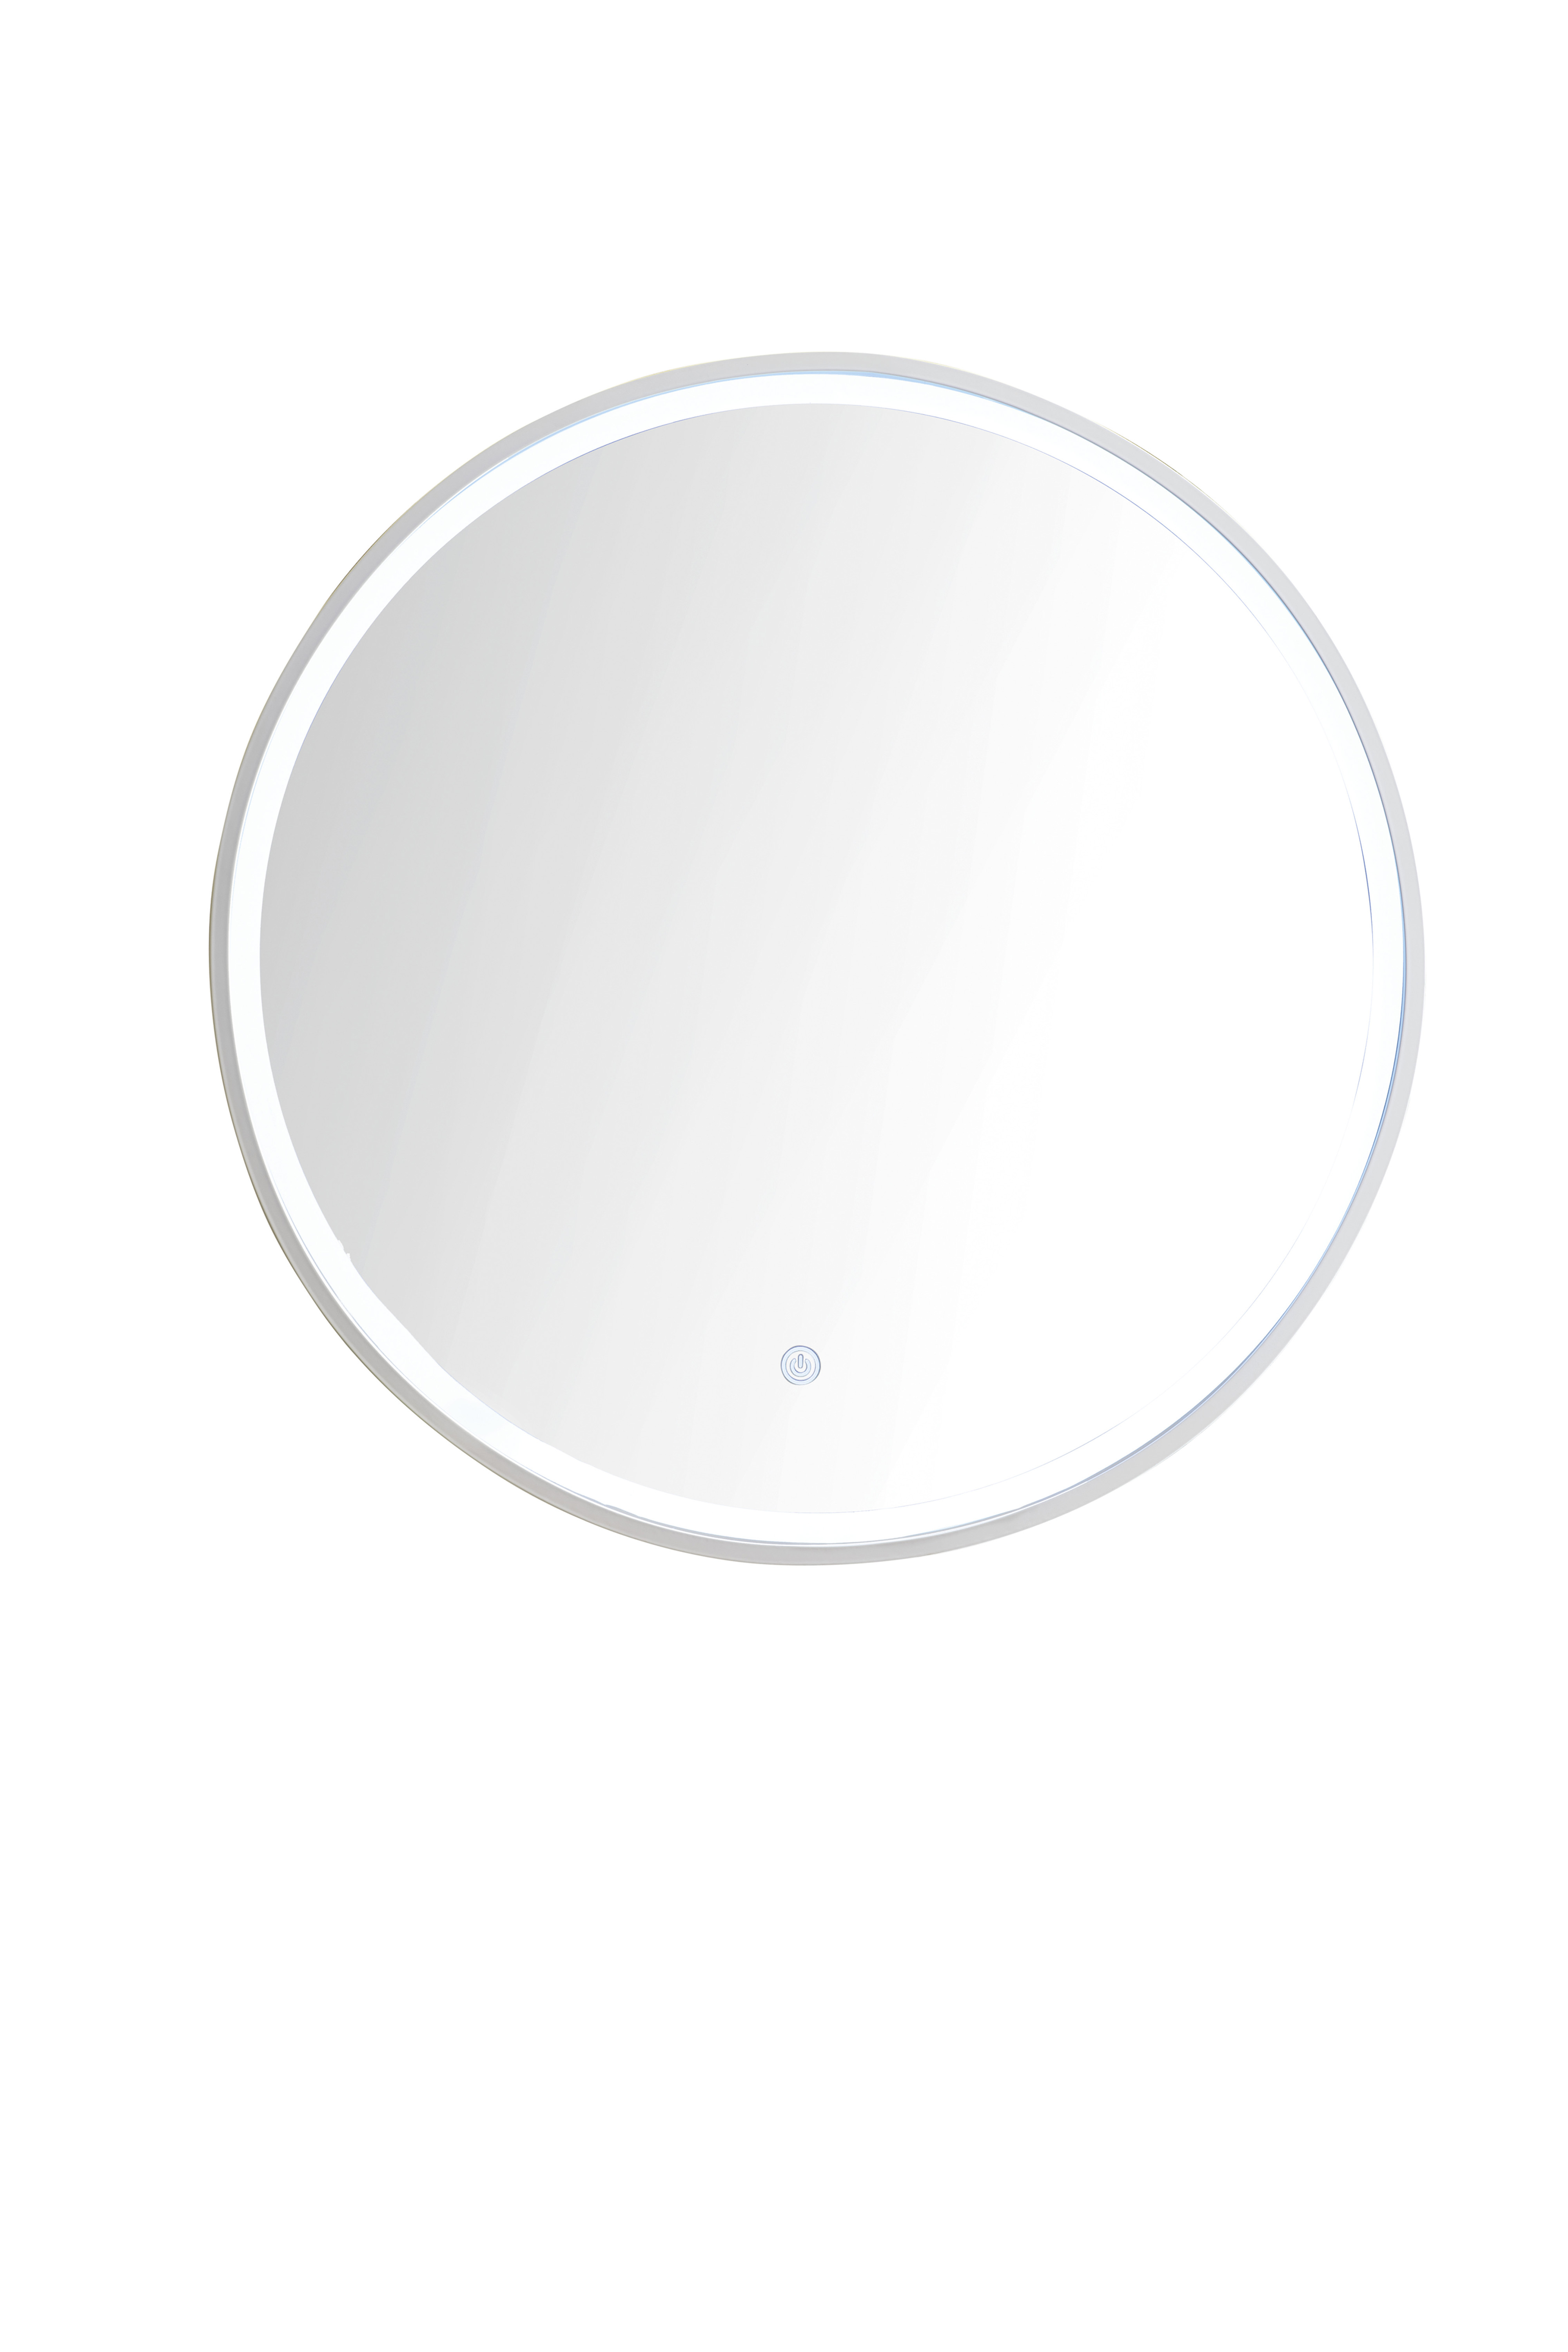 James Martin 933-M24-GW Cirque 24" Mirror, Glossy White